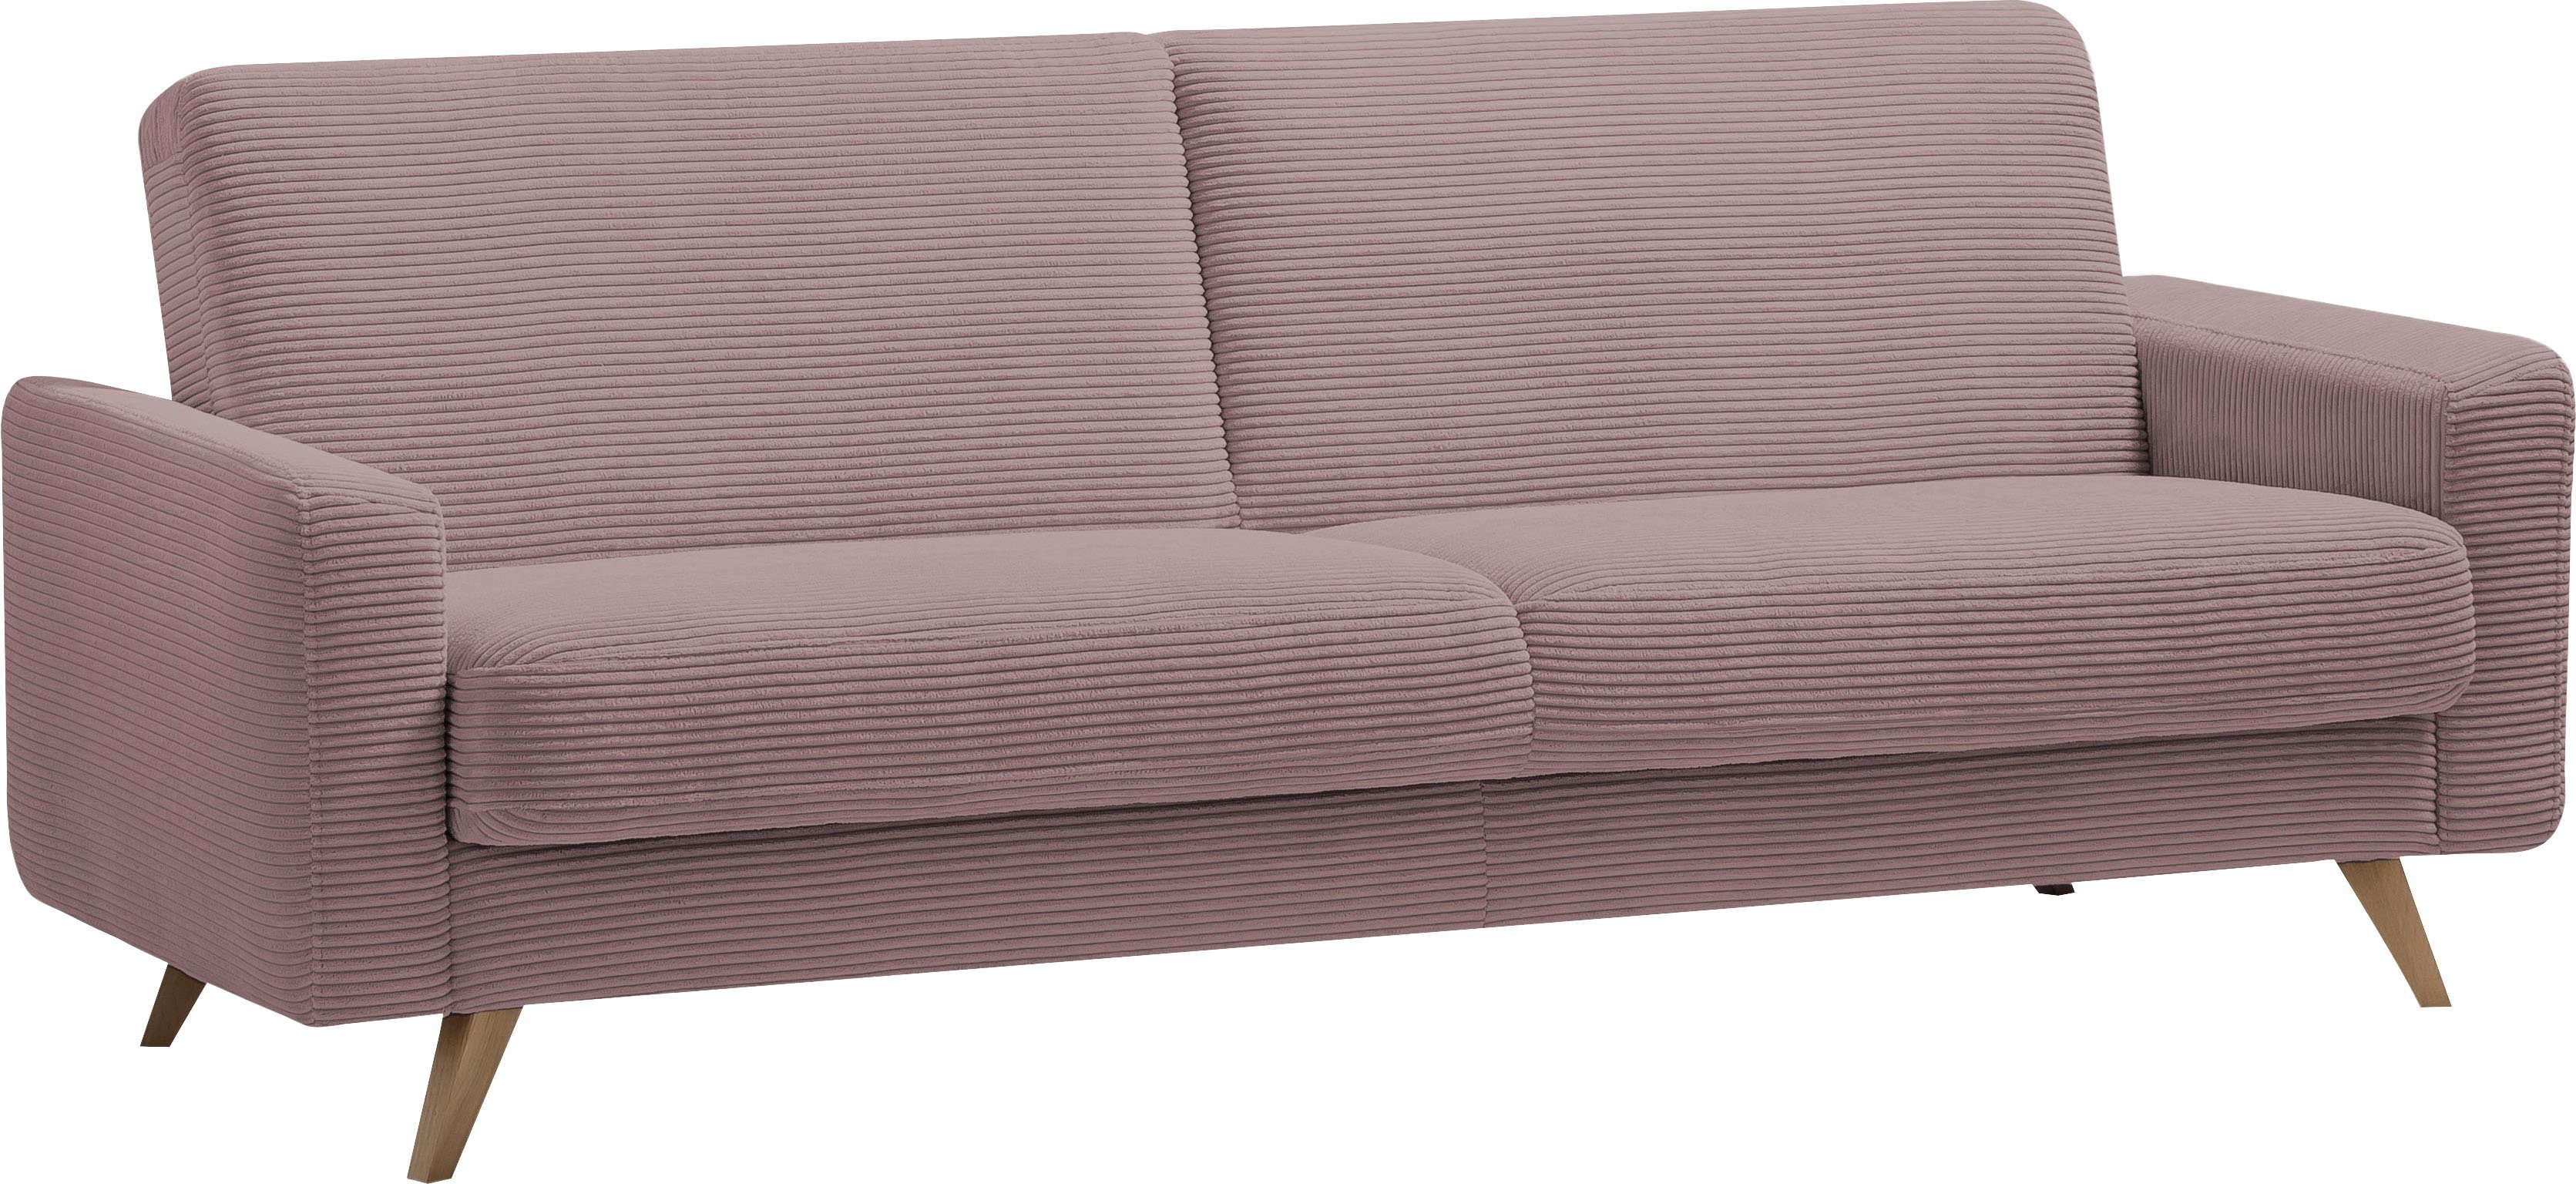 exxpo - rose Samso, und Bettkasten Bettfunktion Inklusive 3-Sitzer sofa fashion old